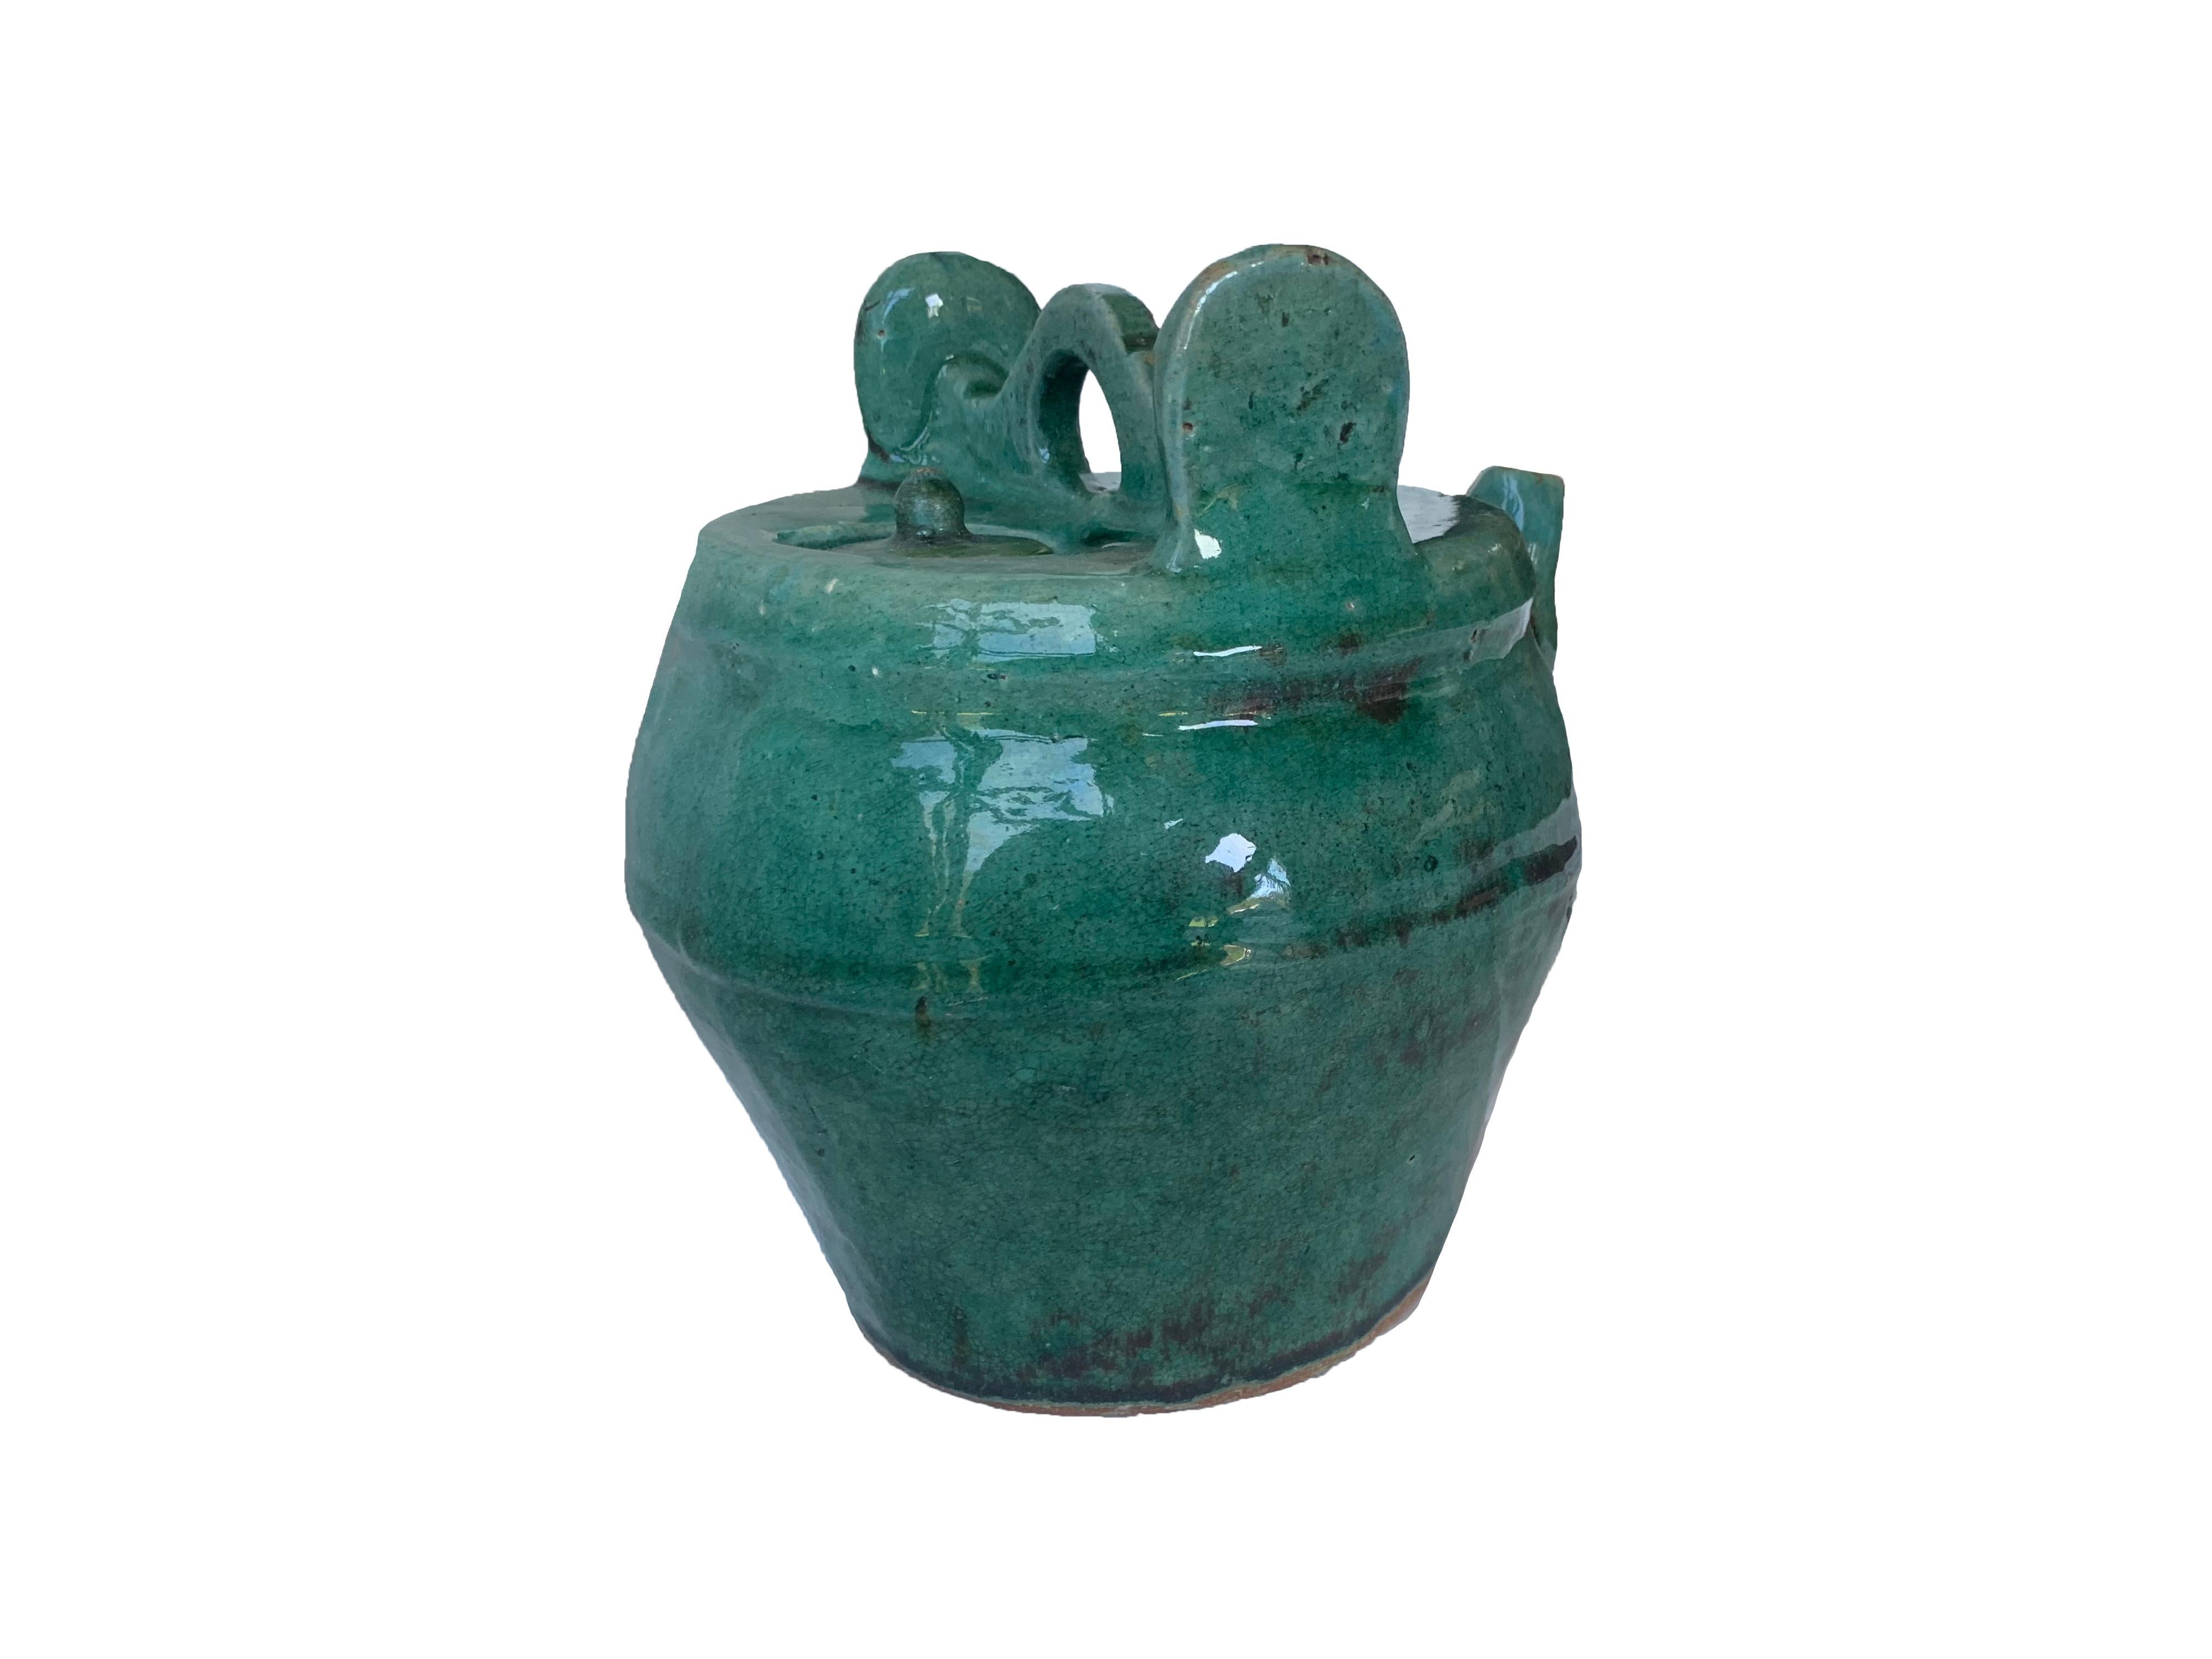 Early 20th century Shiwan green-glazed teapot from China's Shiwanzhen district near Guangdong.